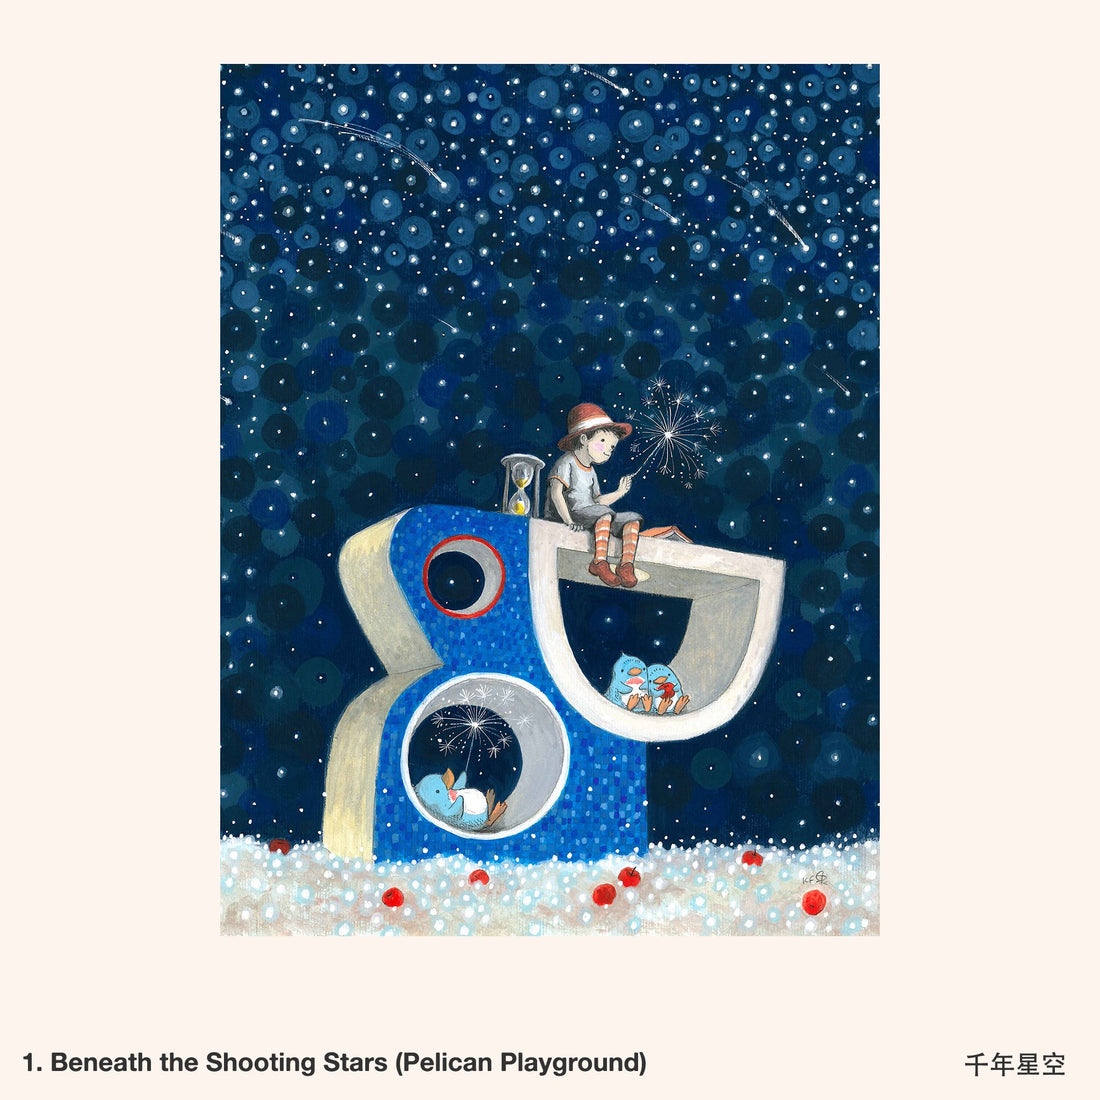 1. Beneath the Shooting Stars (Pelican Playground) Artwork